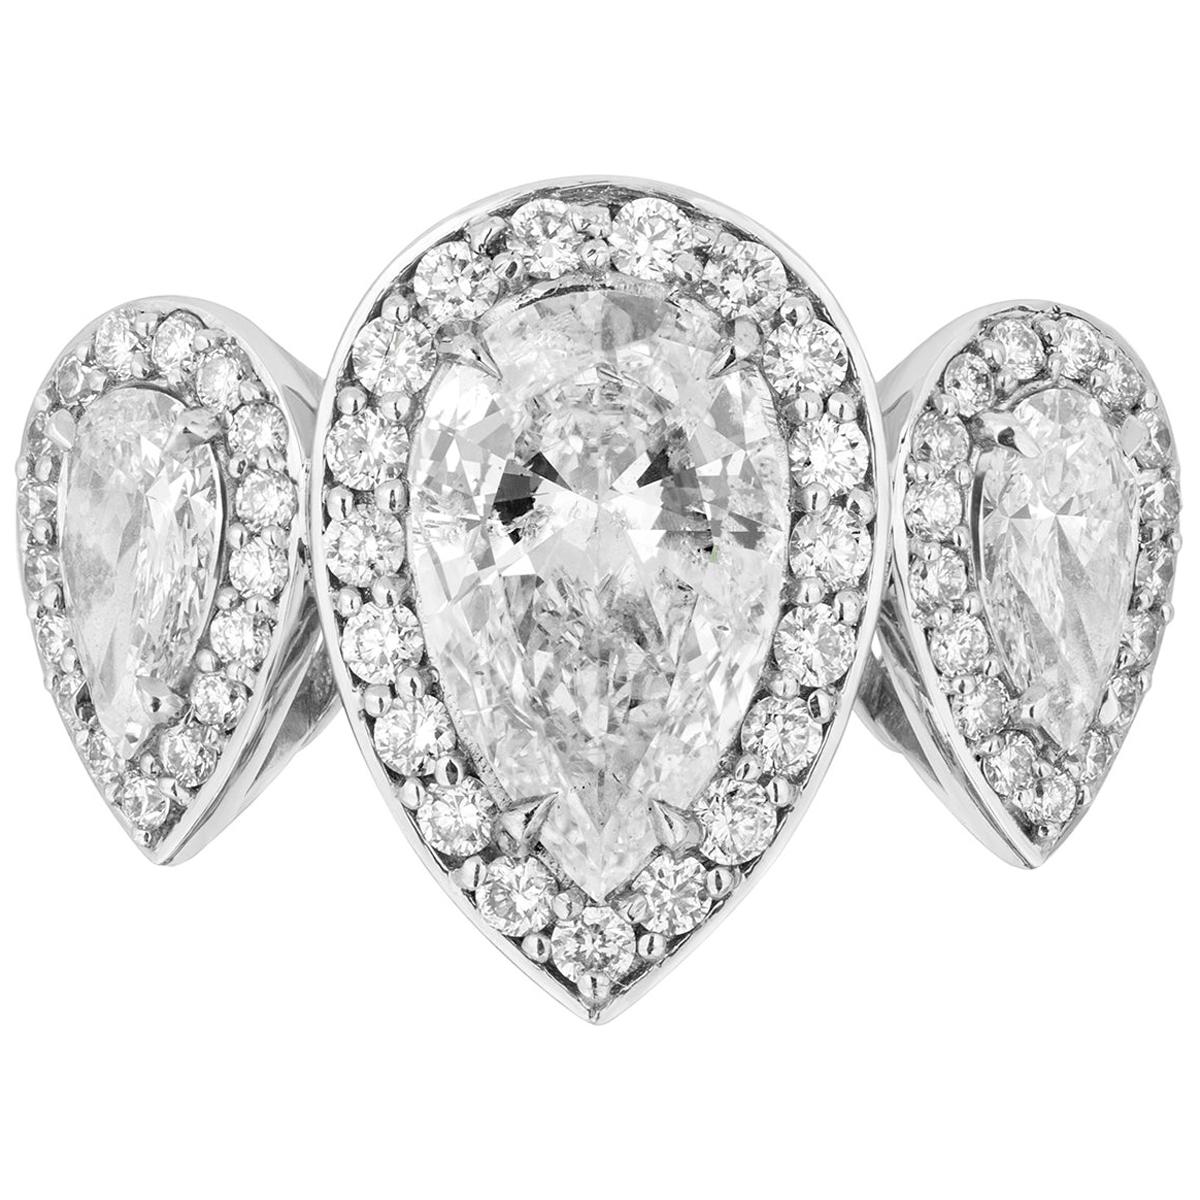 2.17 Carat Pear Shaped Diamond Three-Stone Ring